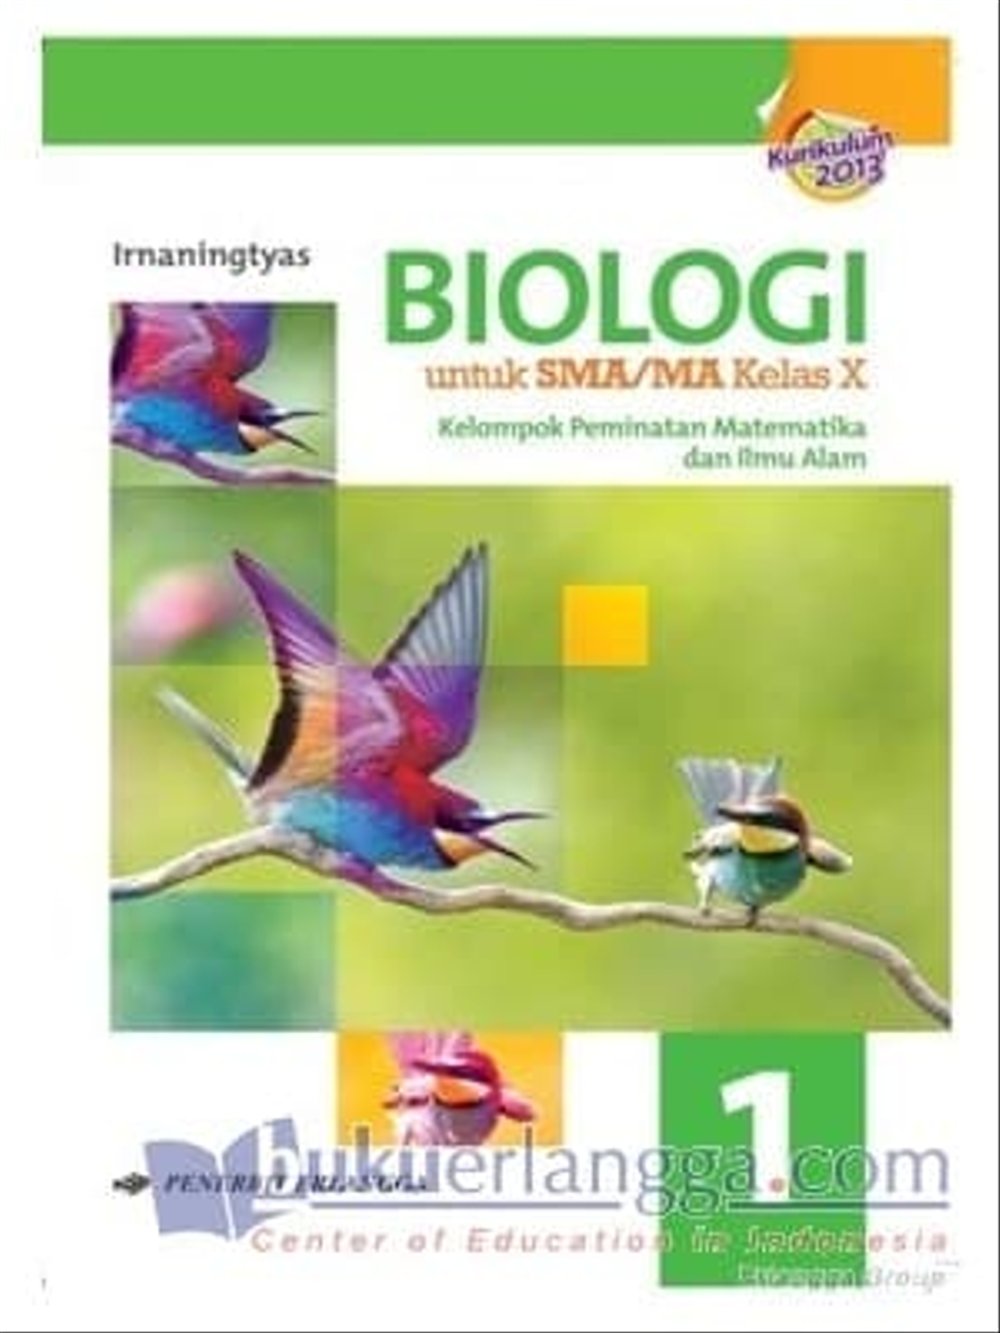 biologi campbell jilid 1 ebook download